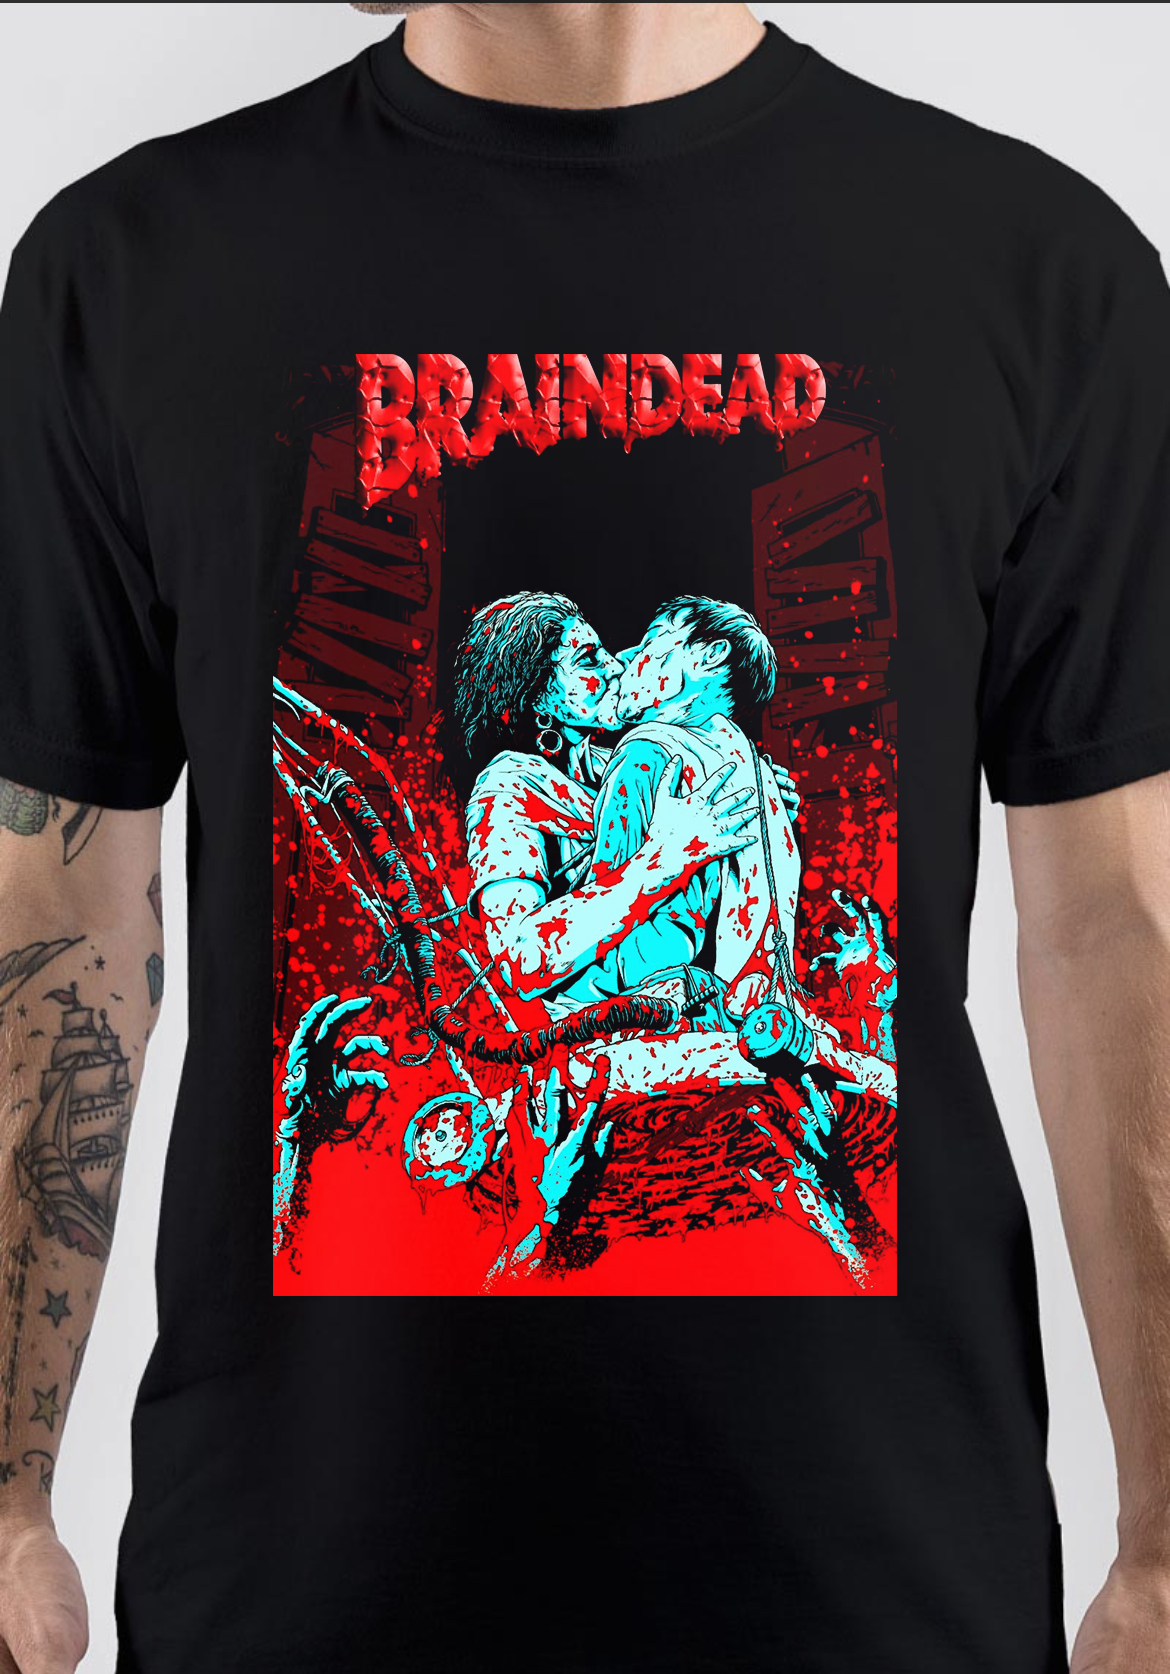 Braindead T-Shirt And Merchandise